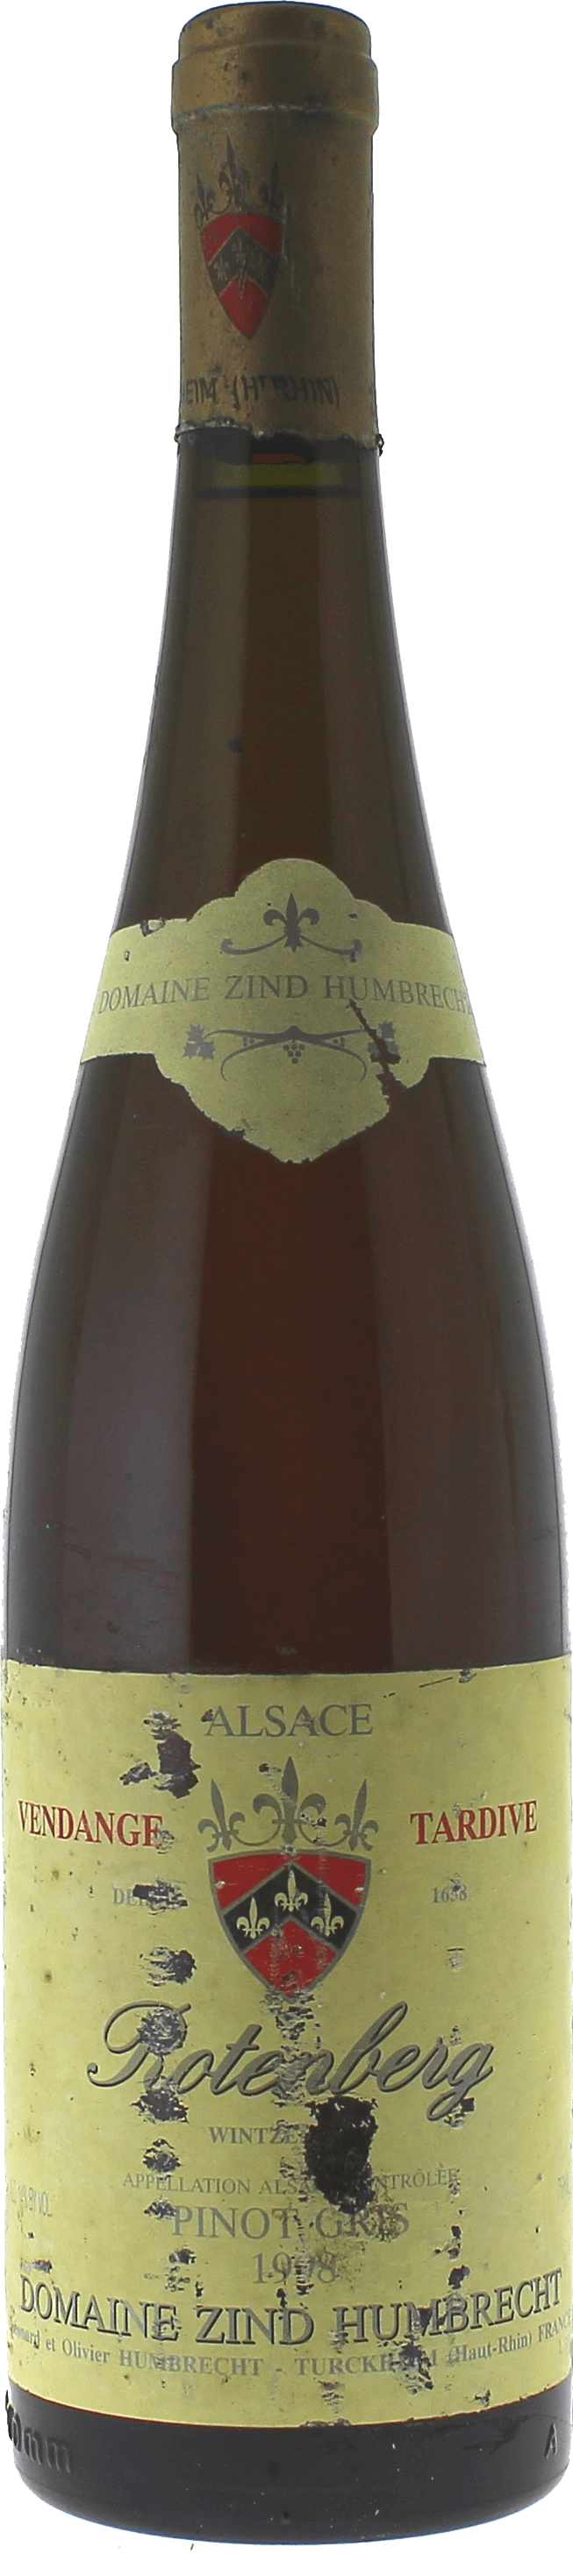 Pinot-gris rotenberg slection de grains nobles zind-humbrecht 2000  Zind Humbrecht, ALSACE